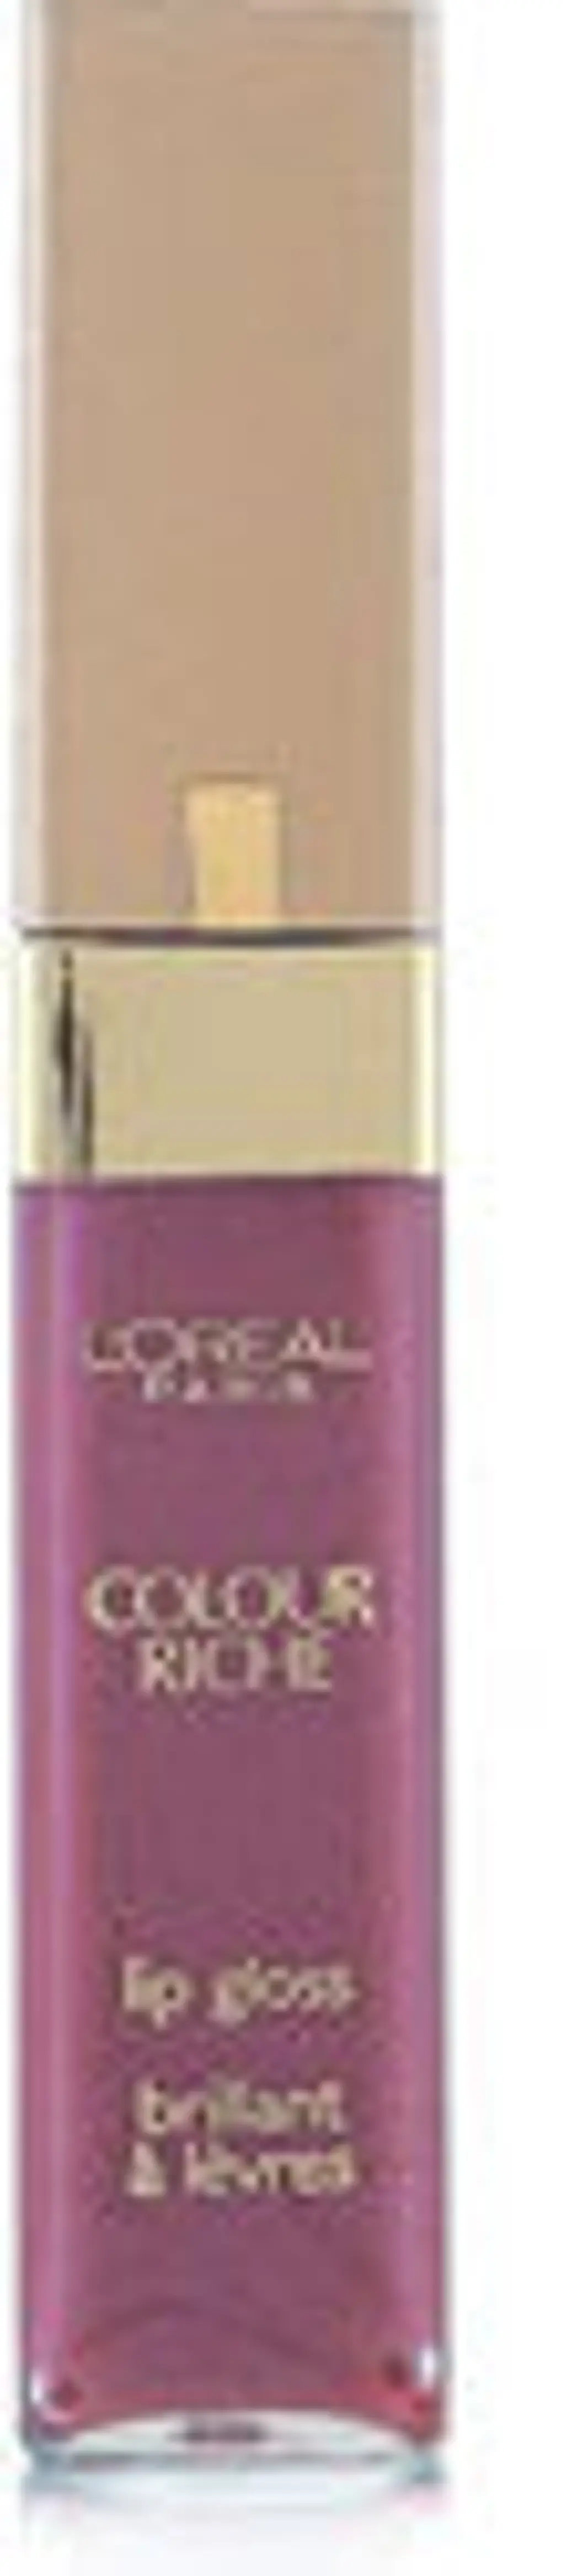 Loreal Colour Riche Lip Gloss, Soft Mauve - 1 Ea